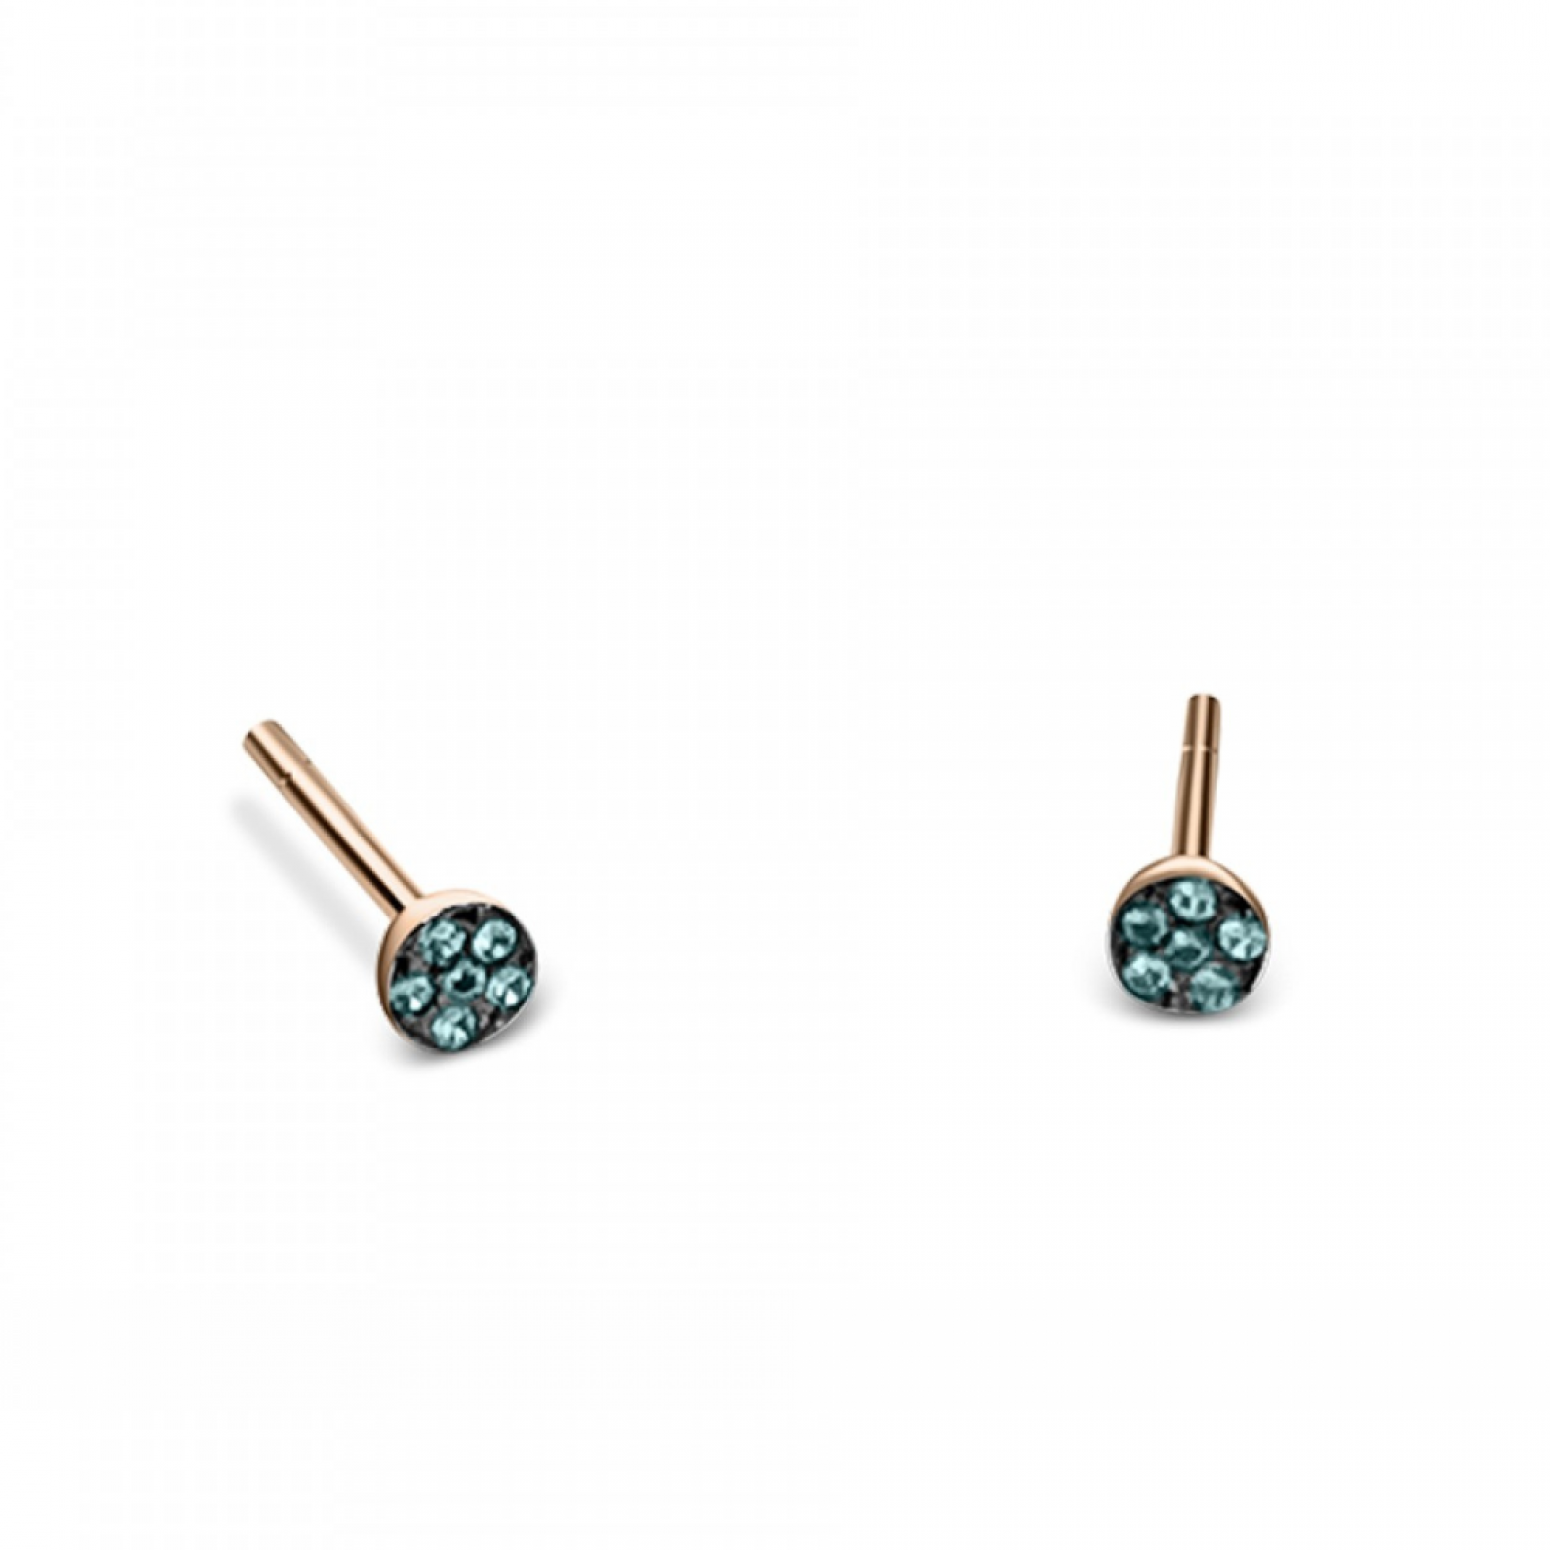 Round earrings K9 pink gold with blue zircon, sk3510 EARRINGS Κοσμηματα - chrilia.gr